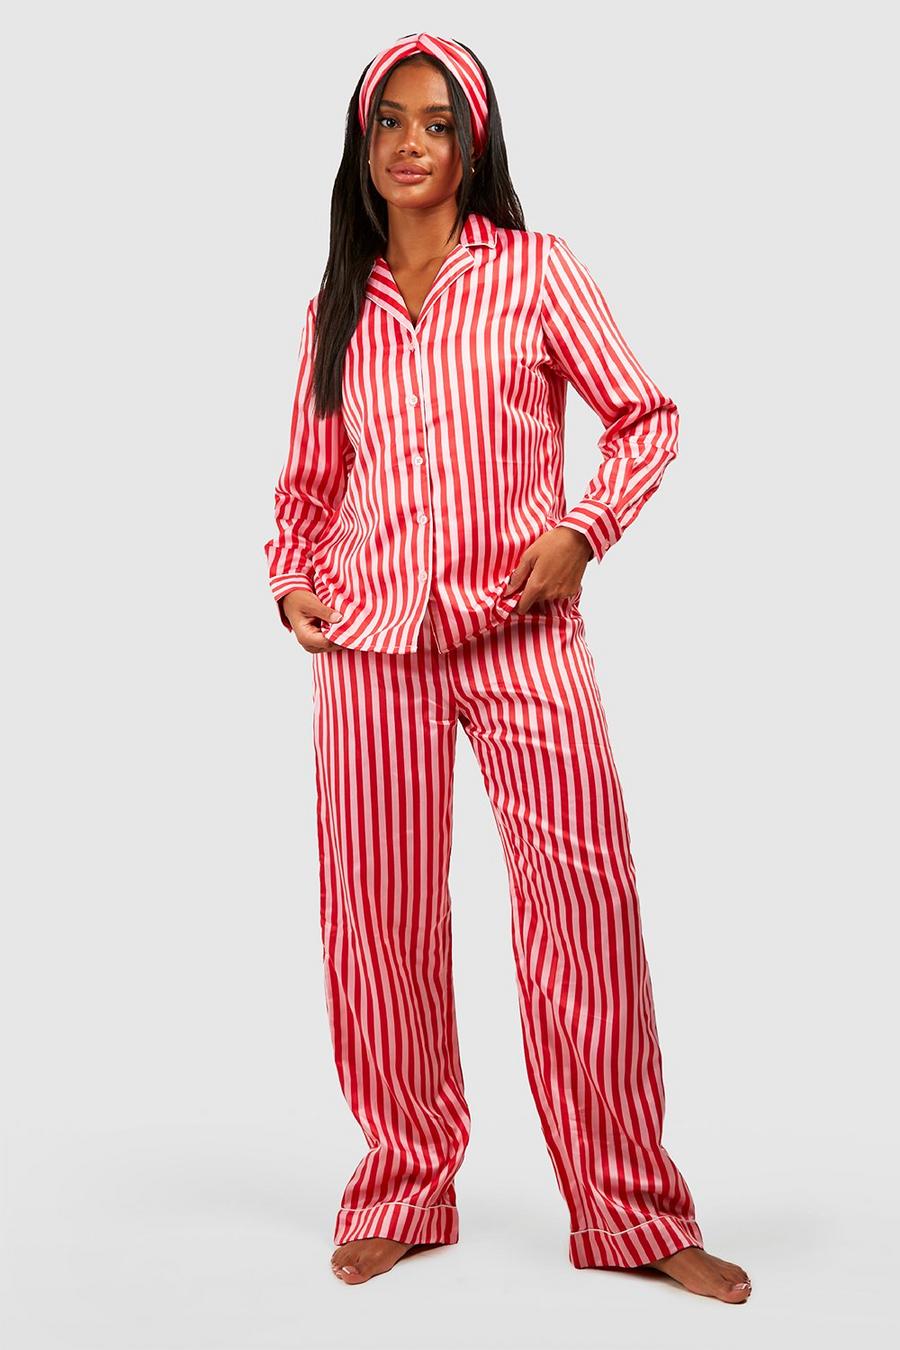 Satin Striped Pyjamas Women, Pajama Sets Women Striped